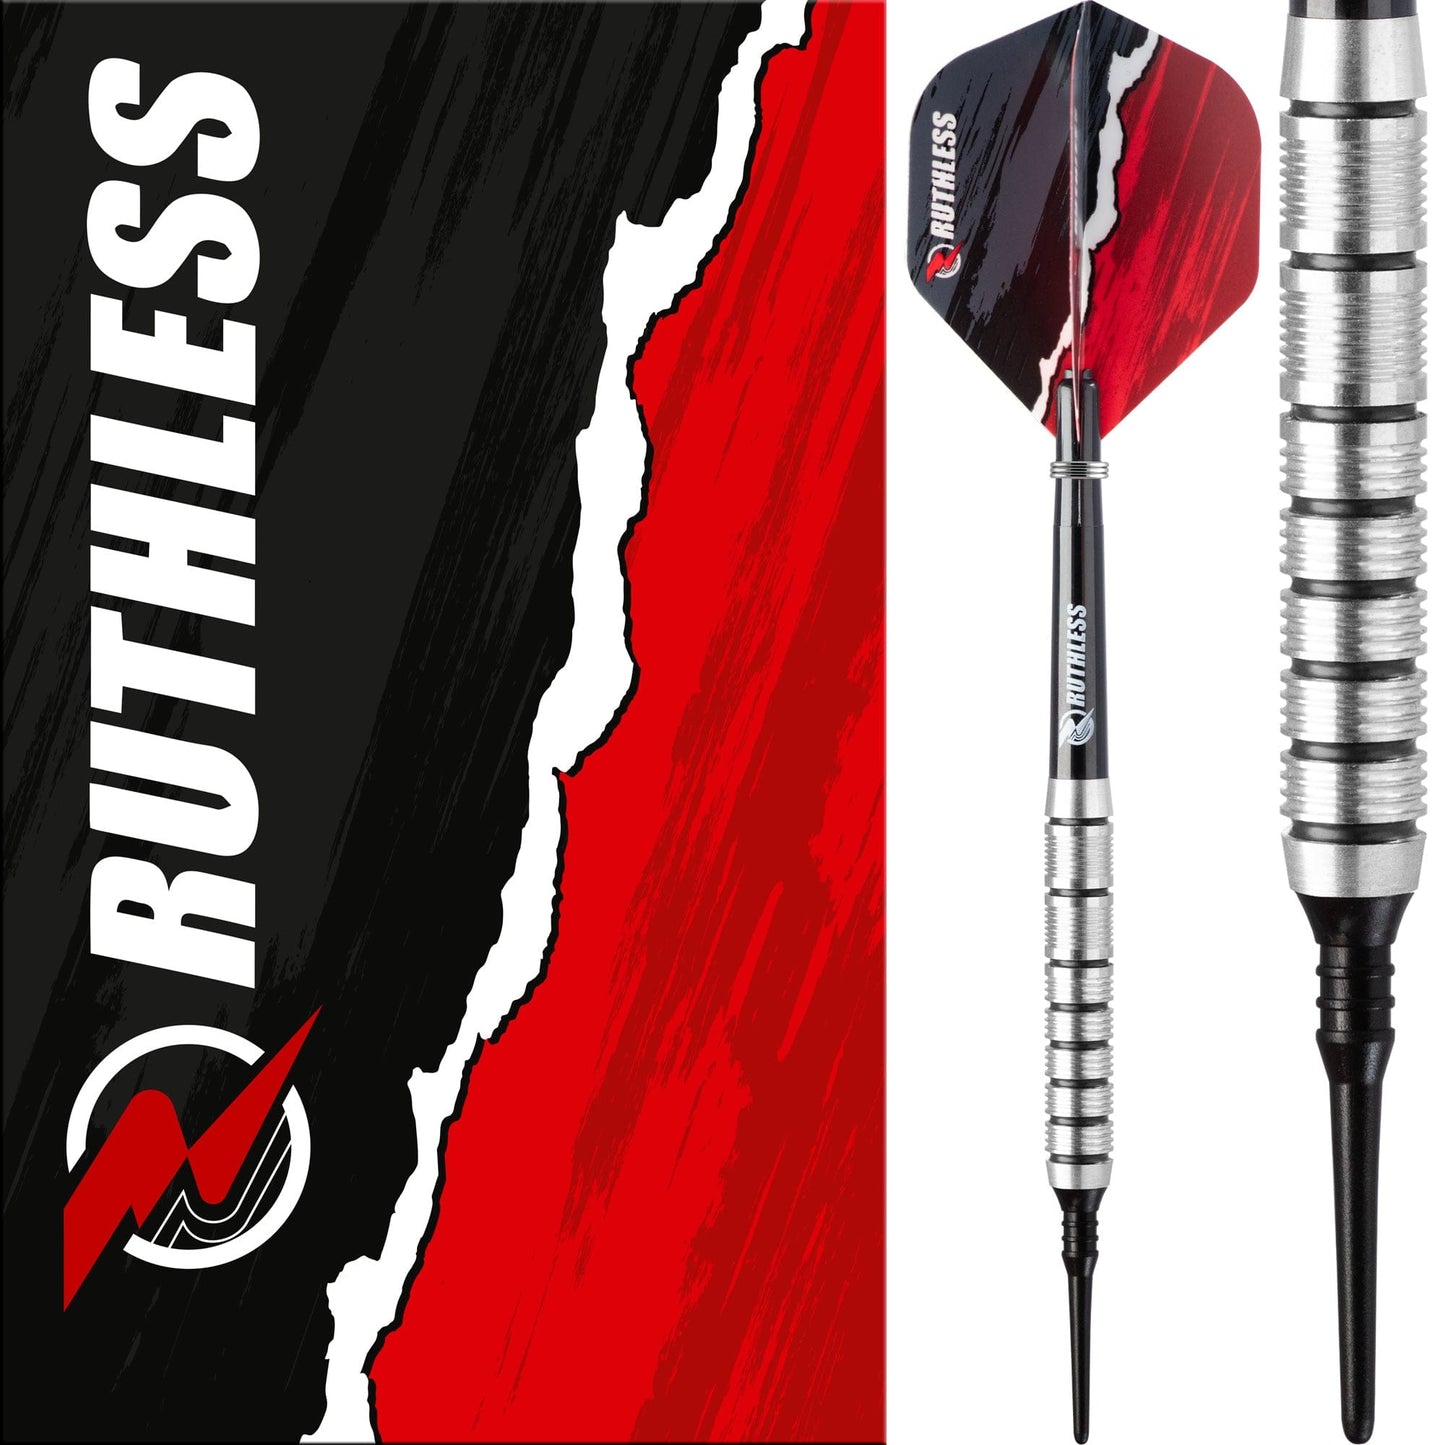 Ruthless Ranger III Darts - Soft Tip Tungsten - BW 16.0g - 18g 18g